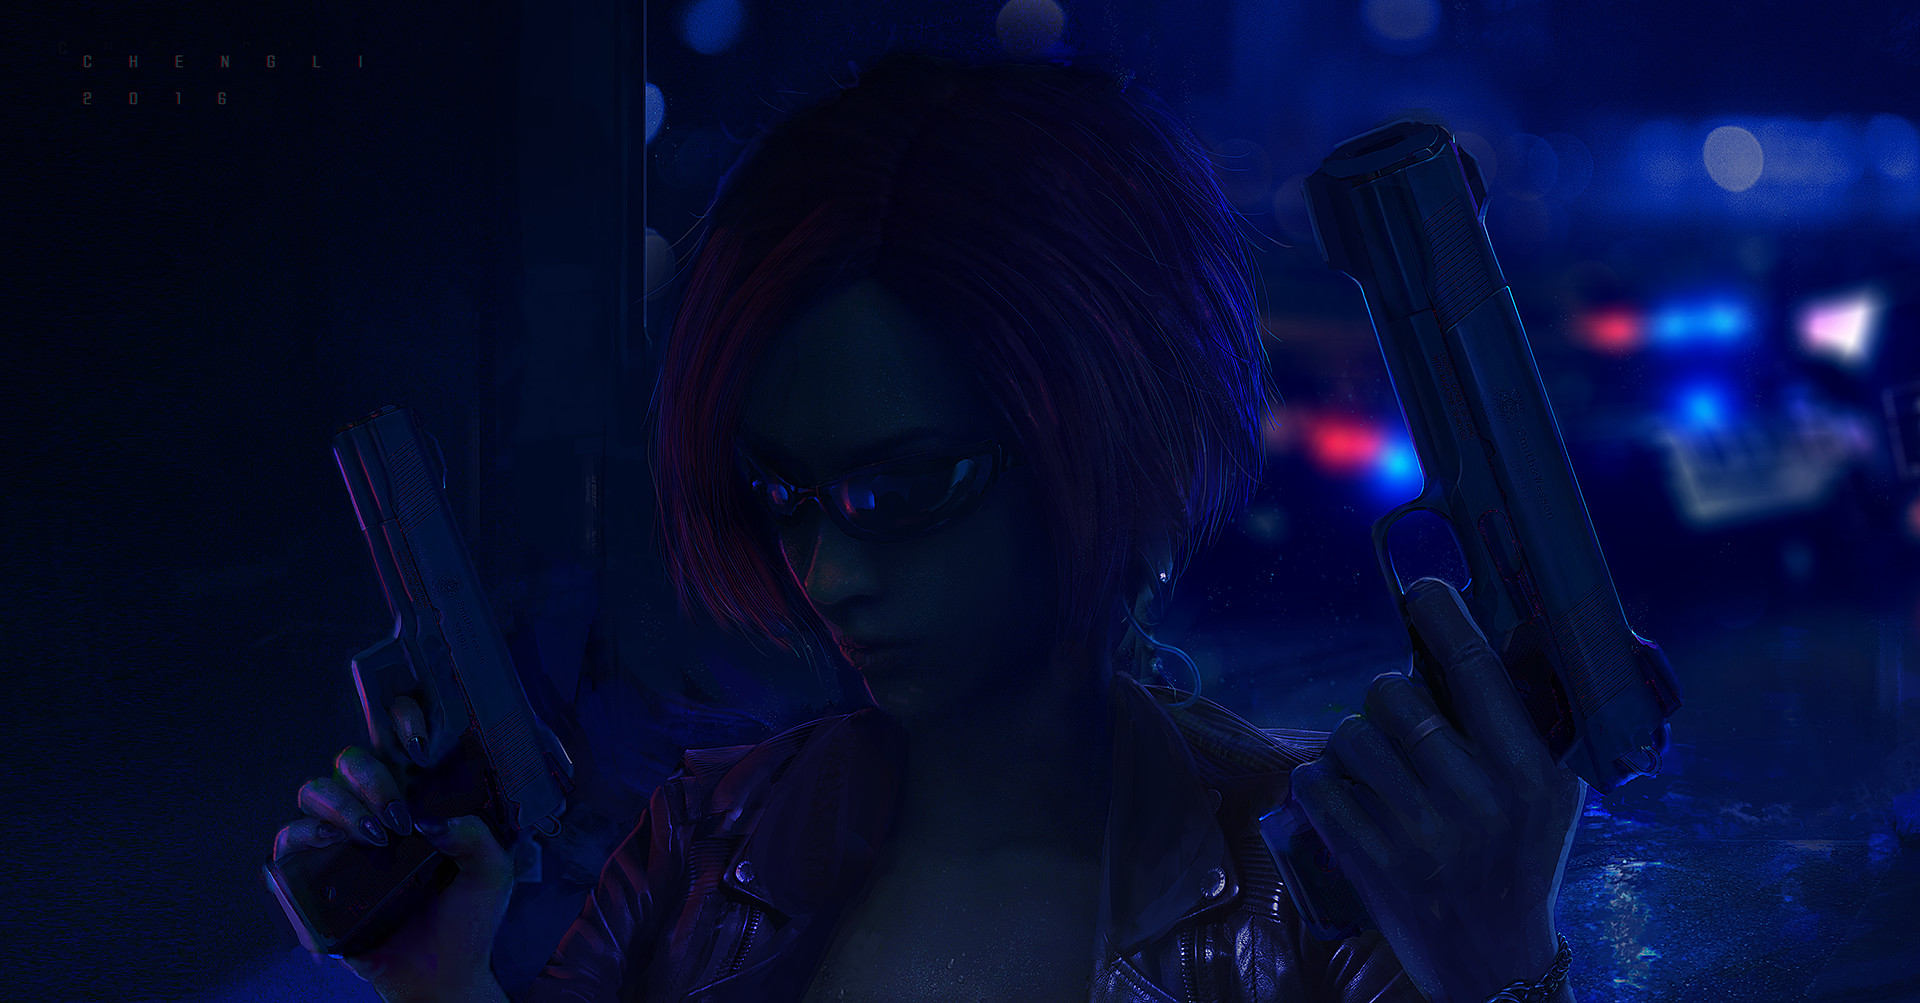 Cheng Li Science Fiction Cyberpunk Warrior Girls Neon Artwork Night Girls With Guns Gun Weapon Dark  1920x1003